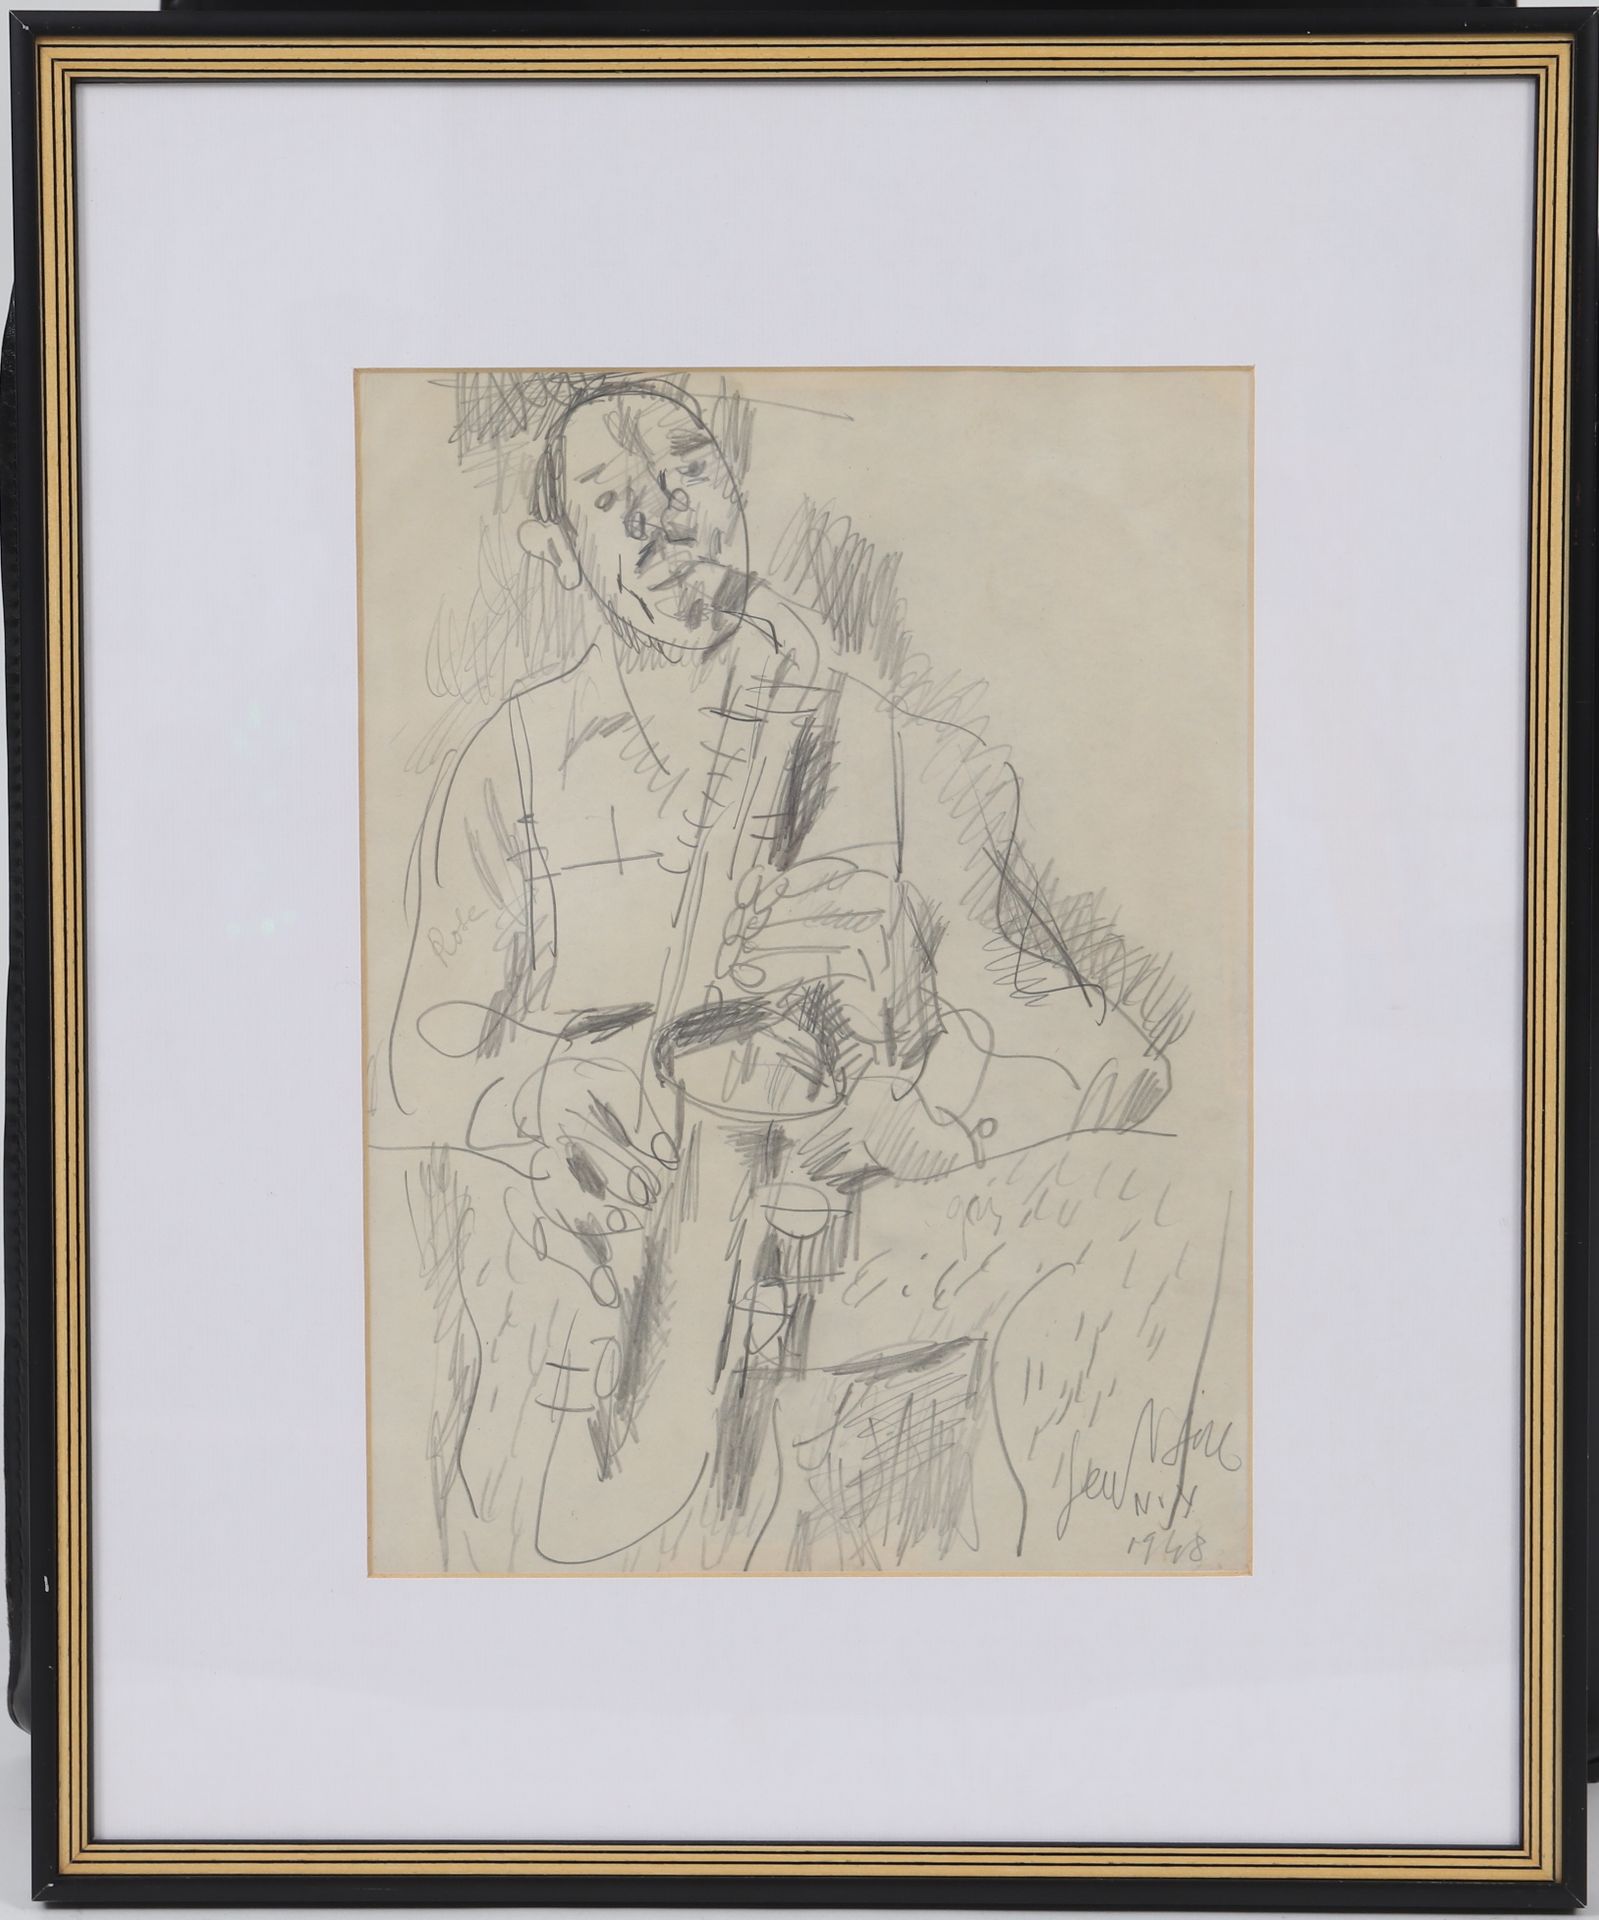 Null 根-保罗(1895-1975) 
法国画家 
萨克斯演奏家 
纸上铅笔画，签名和日期为1948年。 
作品于1948年5月在纽约与第二任妻子度蜜月期间&hellip;